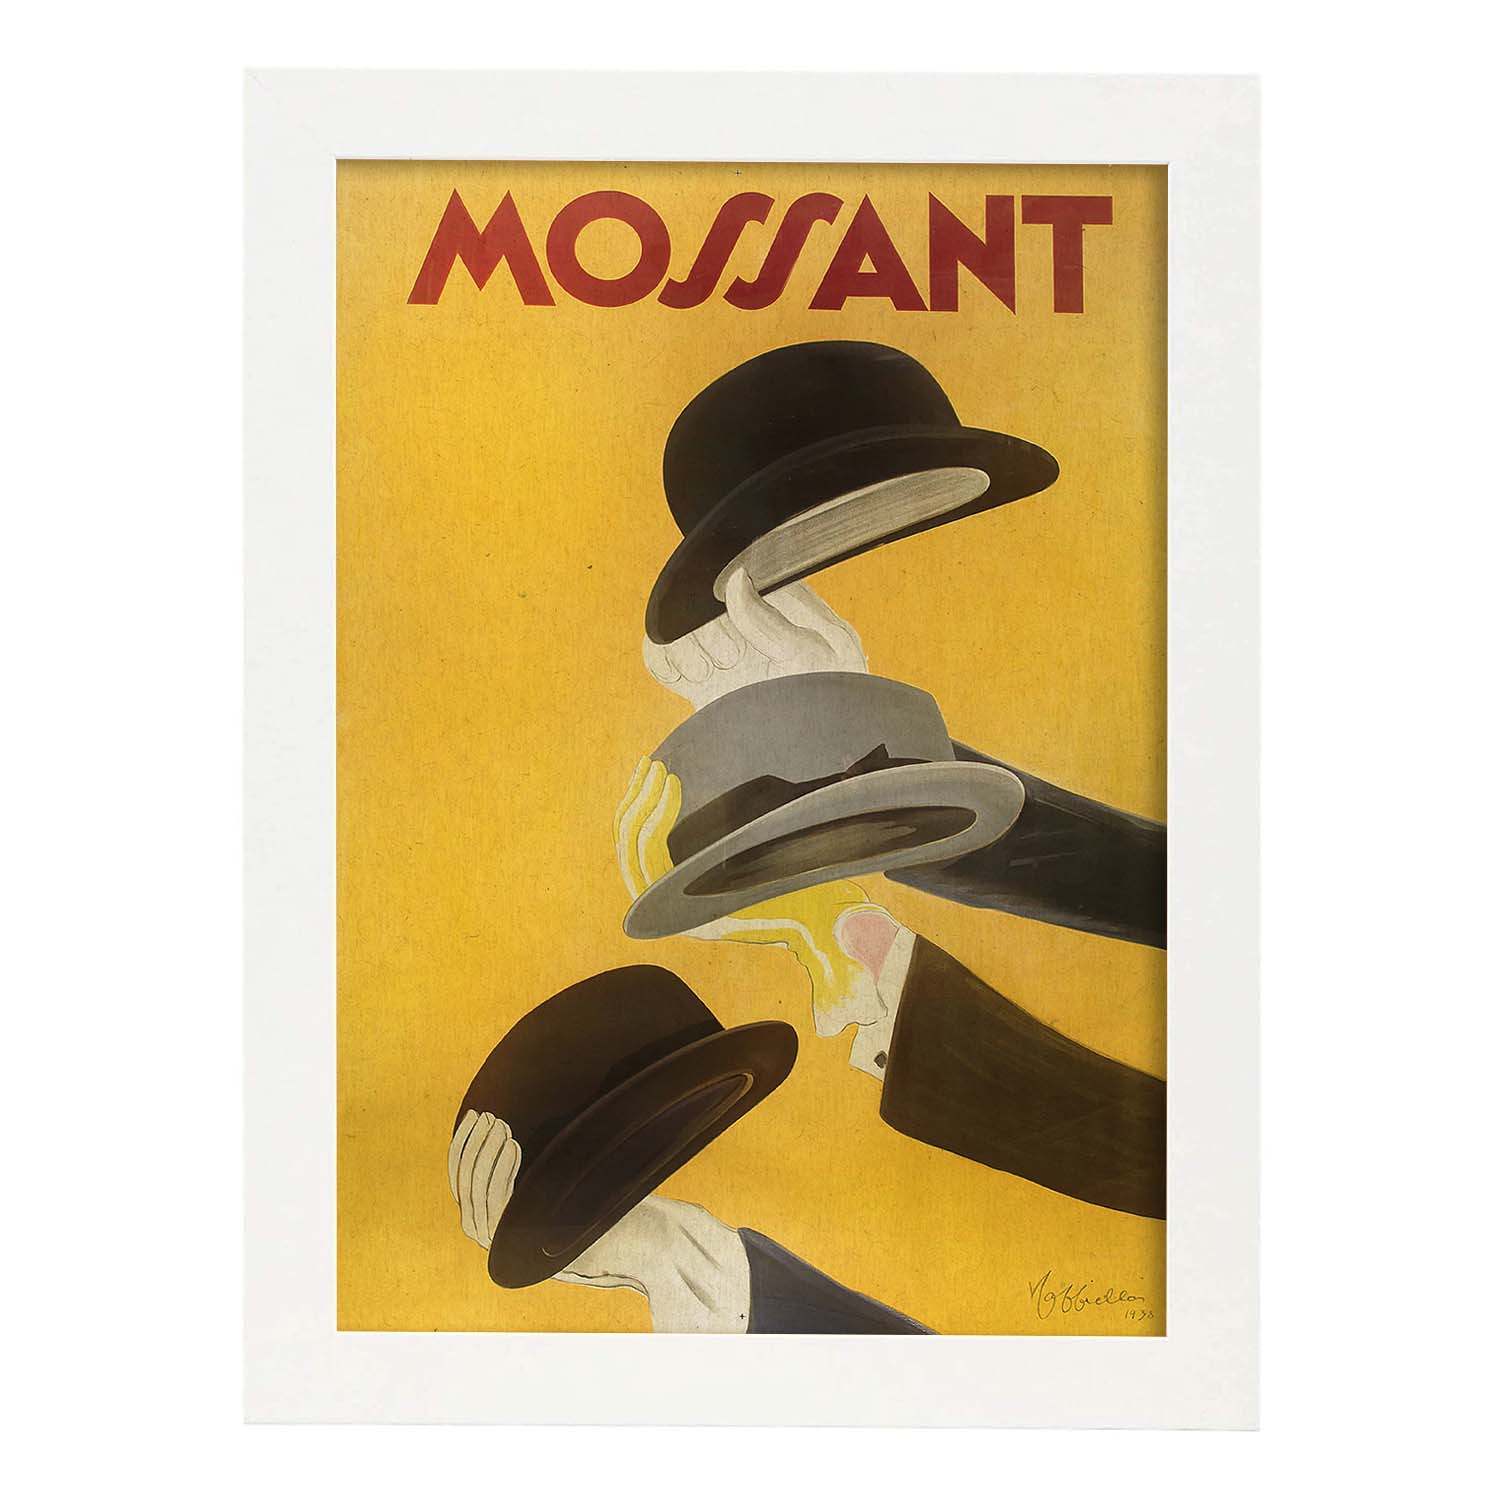 Poster vintage. Cartel vintage "Mossant" Leonetto Cappiello de 1938..-Artwork-Nacnic-A4-Marco Blanco-Nacnic Estudio SL